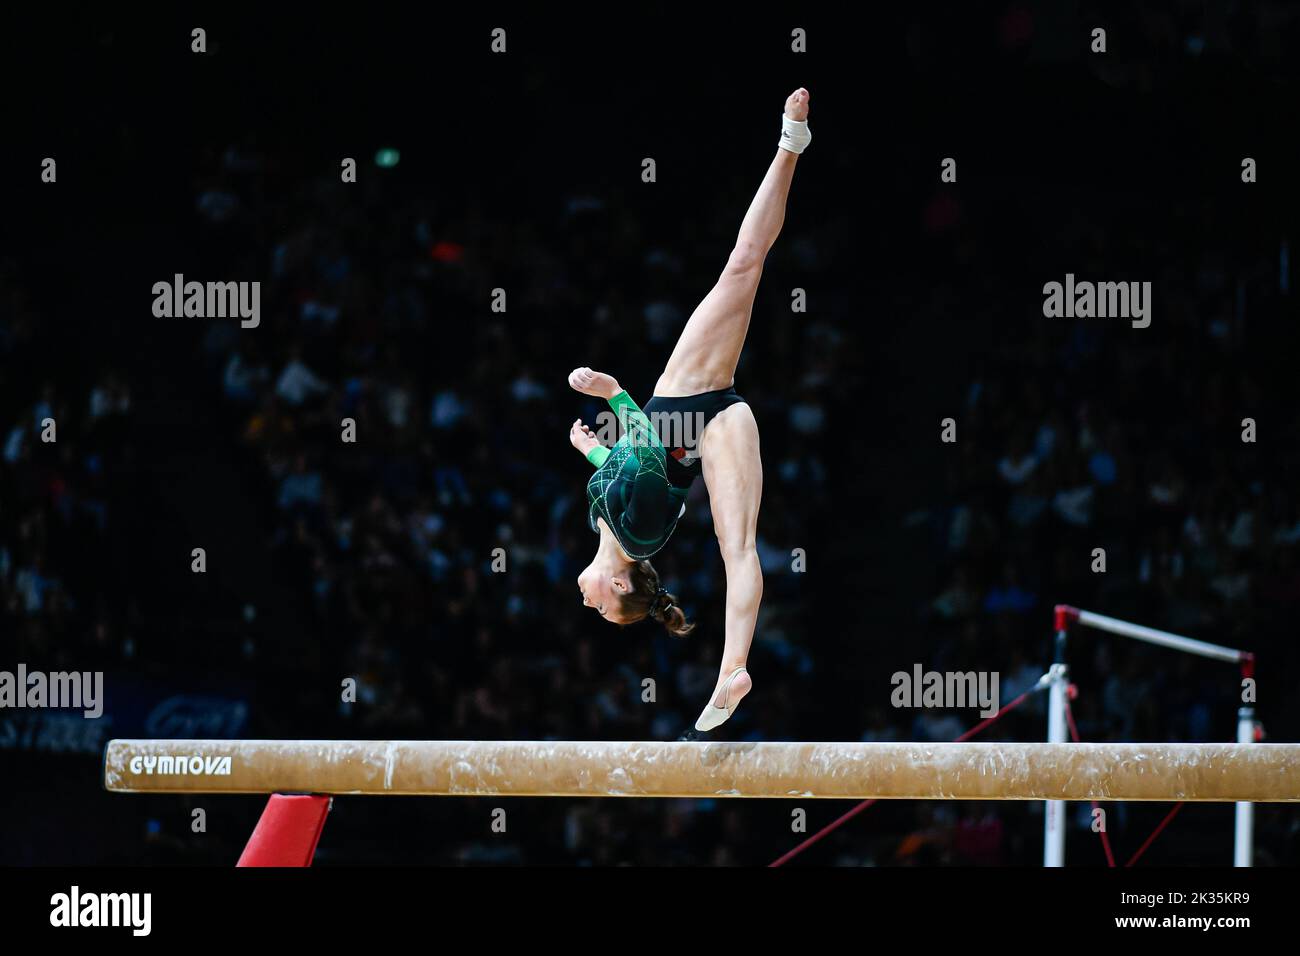 Gymnastics balance beam hi-res stock photography and images - Page 8 - Alamy